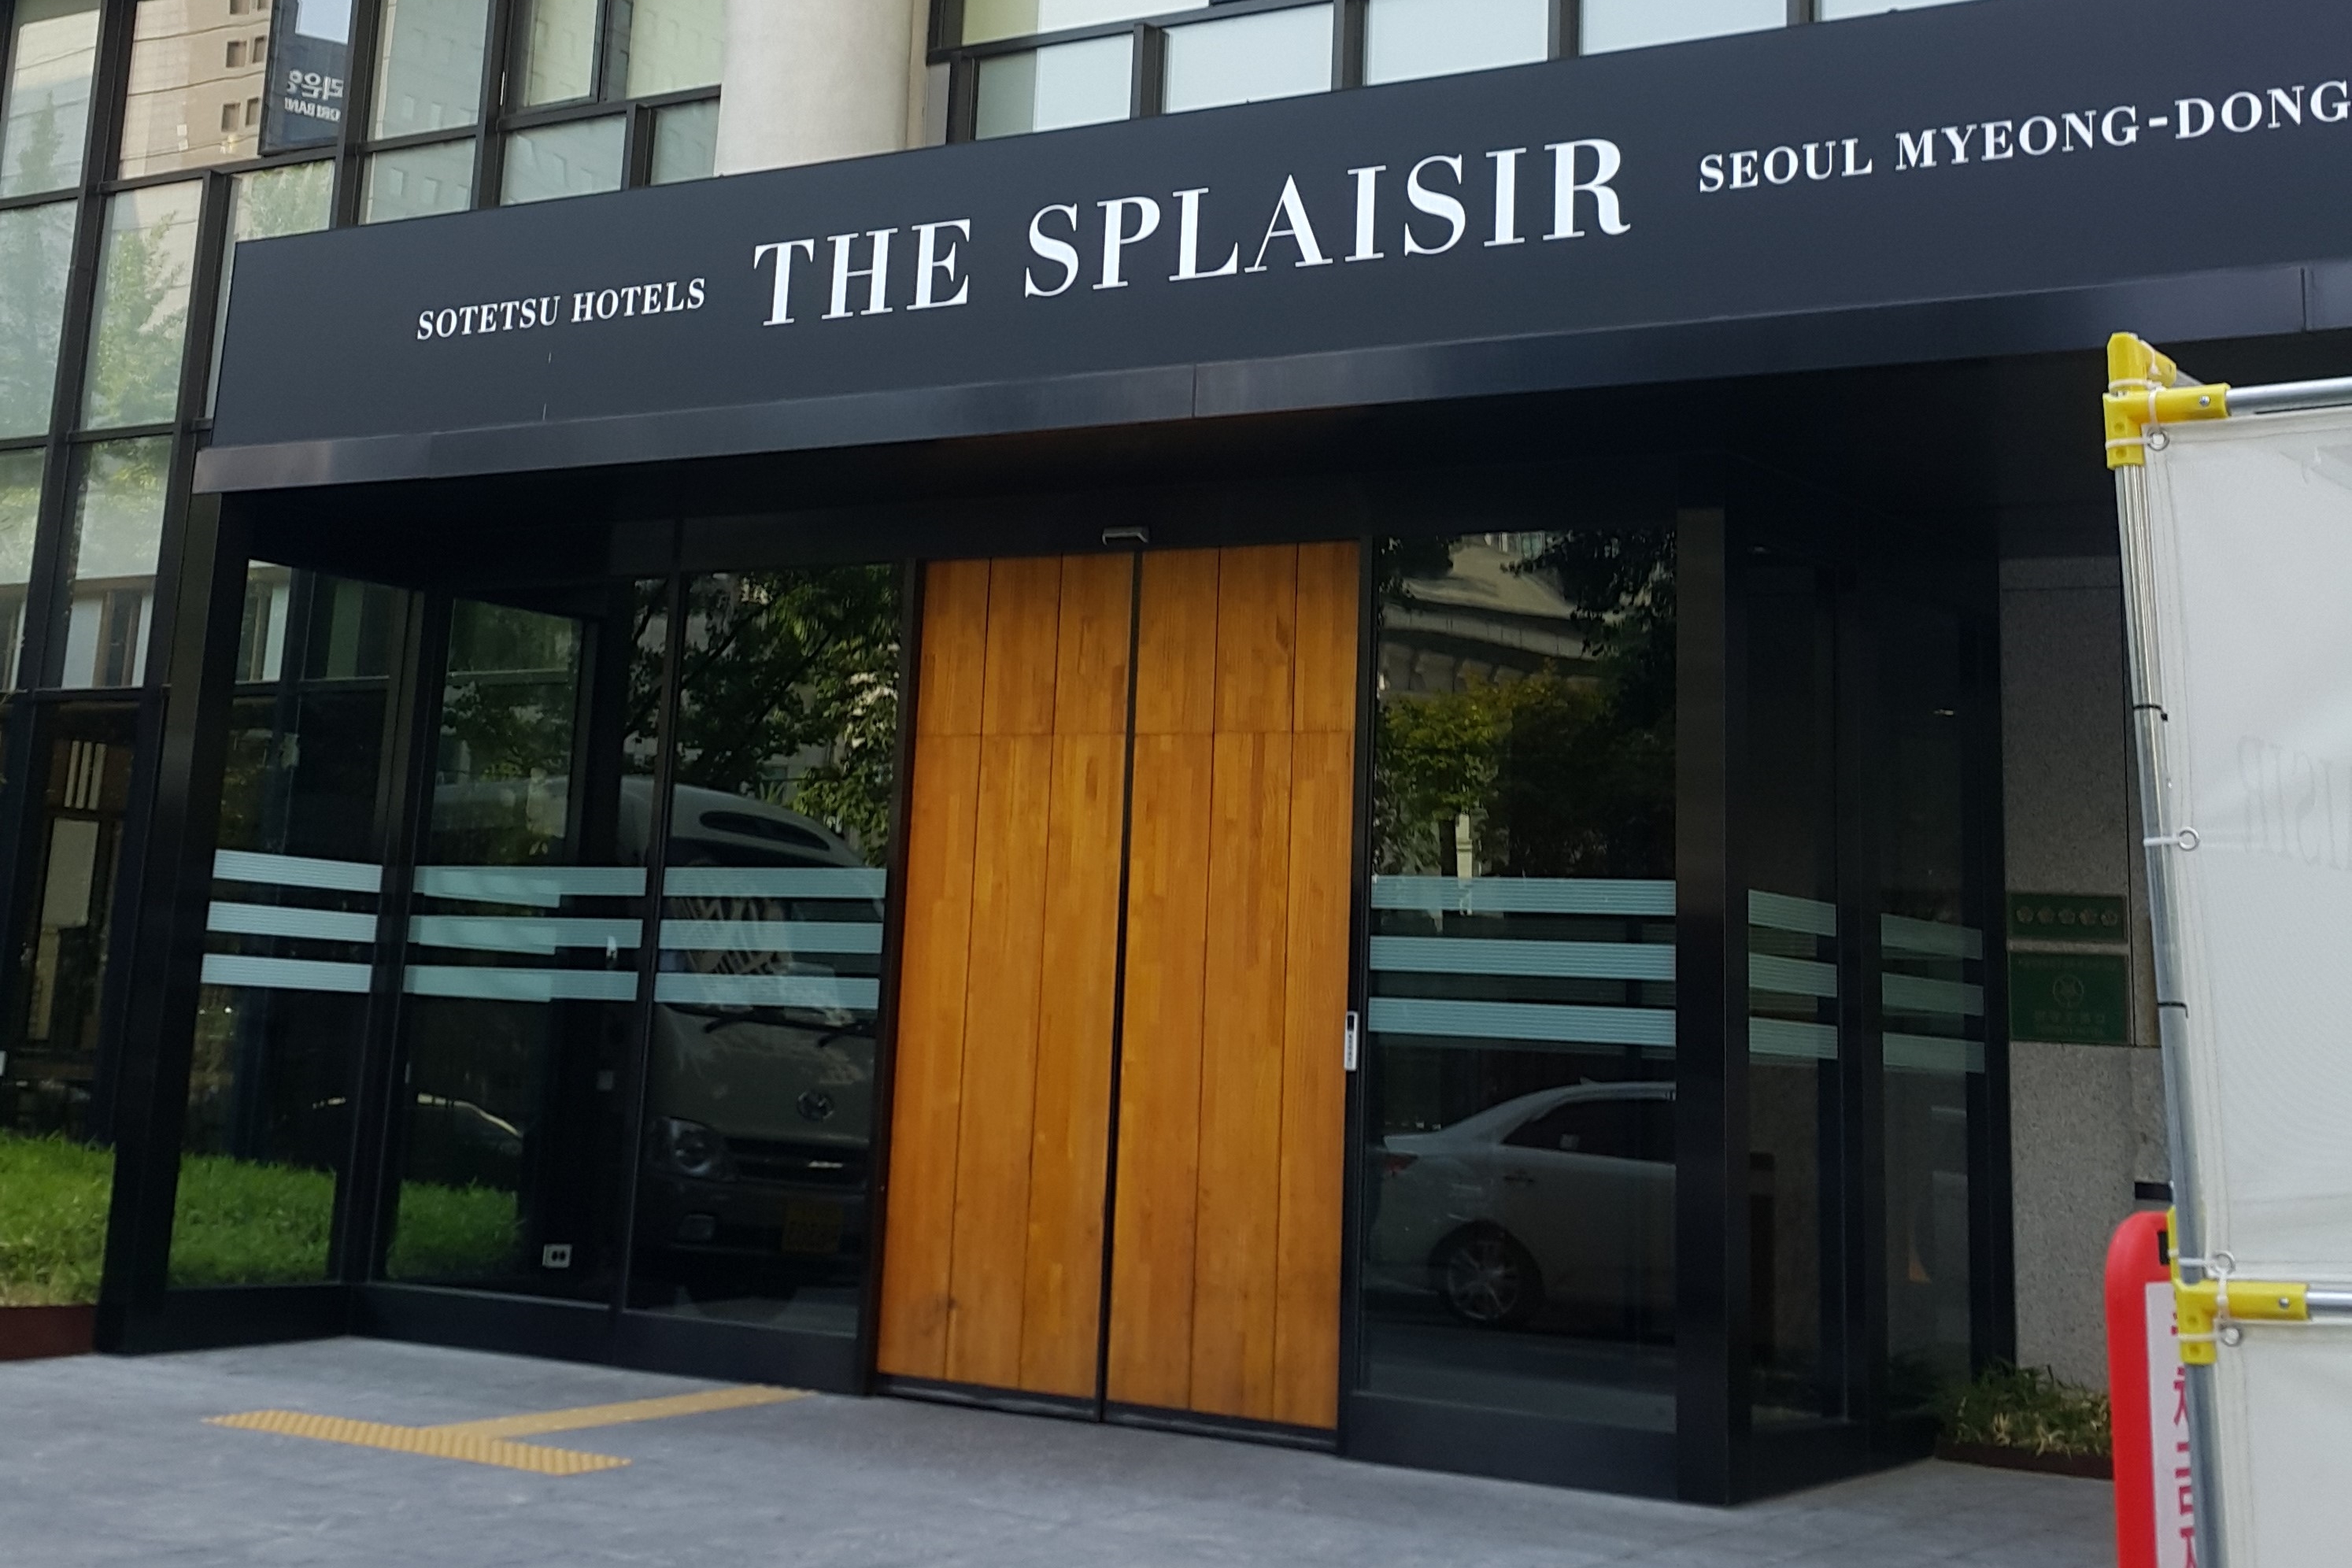 Sotetsu Hotels The Splaisir Seoul Myeongdong1 : Room entrance of the Sotetsu Hotels The Splaisir Seoul Myeongdong with tactile flooring
